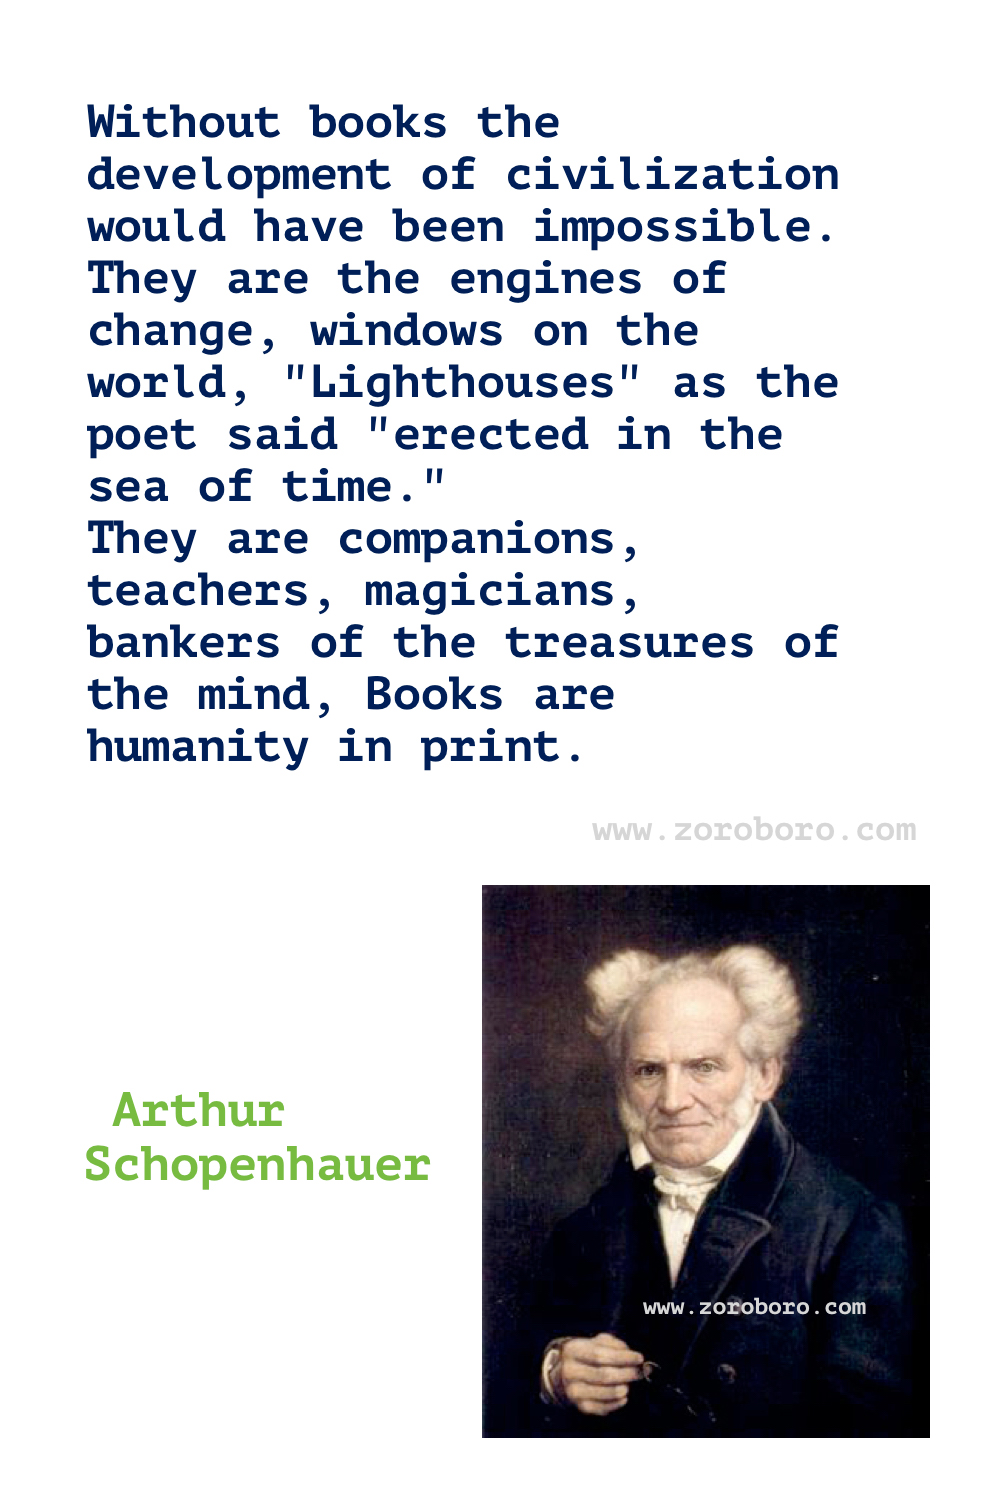 Arthur Schopenhauer Quotes, Arthur Schopenhauer Philosophy, Arthur Schopenhauer Essay & Books Quotes, Arthur Schopenhauer ON Intellectual, Mind, Loneliness, Love, Reading & Religion. Quotes By Schopenhauer (Part 1)